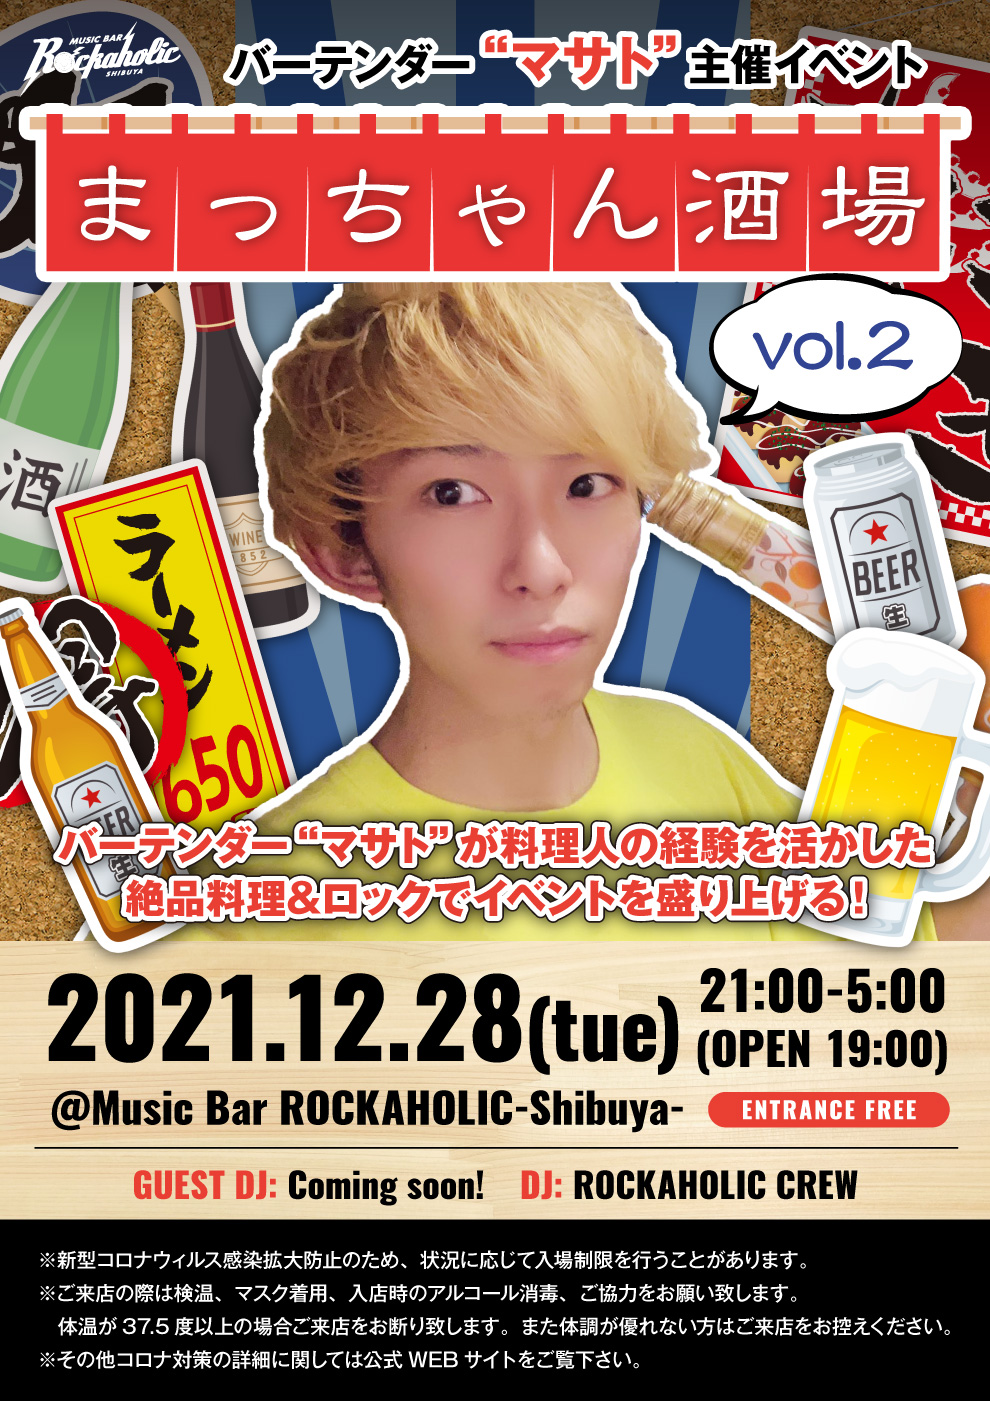 https://bar-rockaholic.jp/shibuya/blog/67EF0106-ECE9-4B83-B9DA-C6960DDD850C.JPG